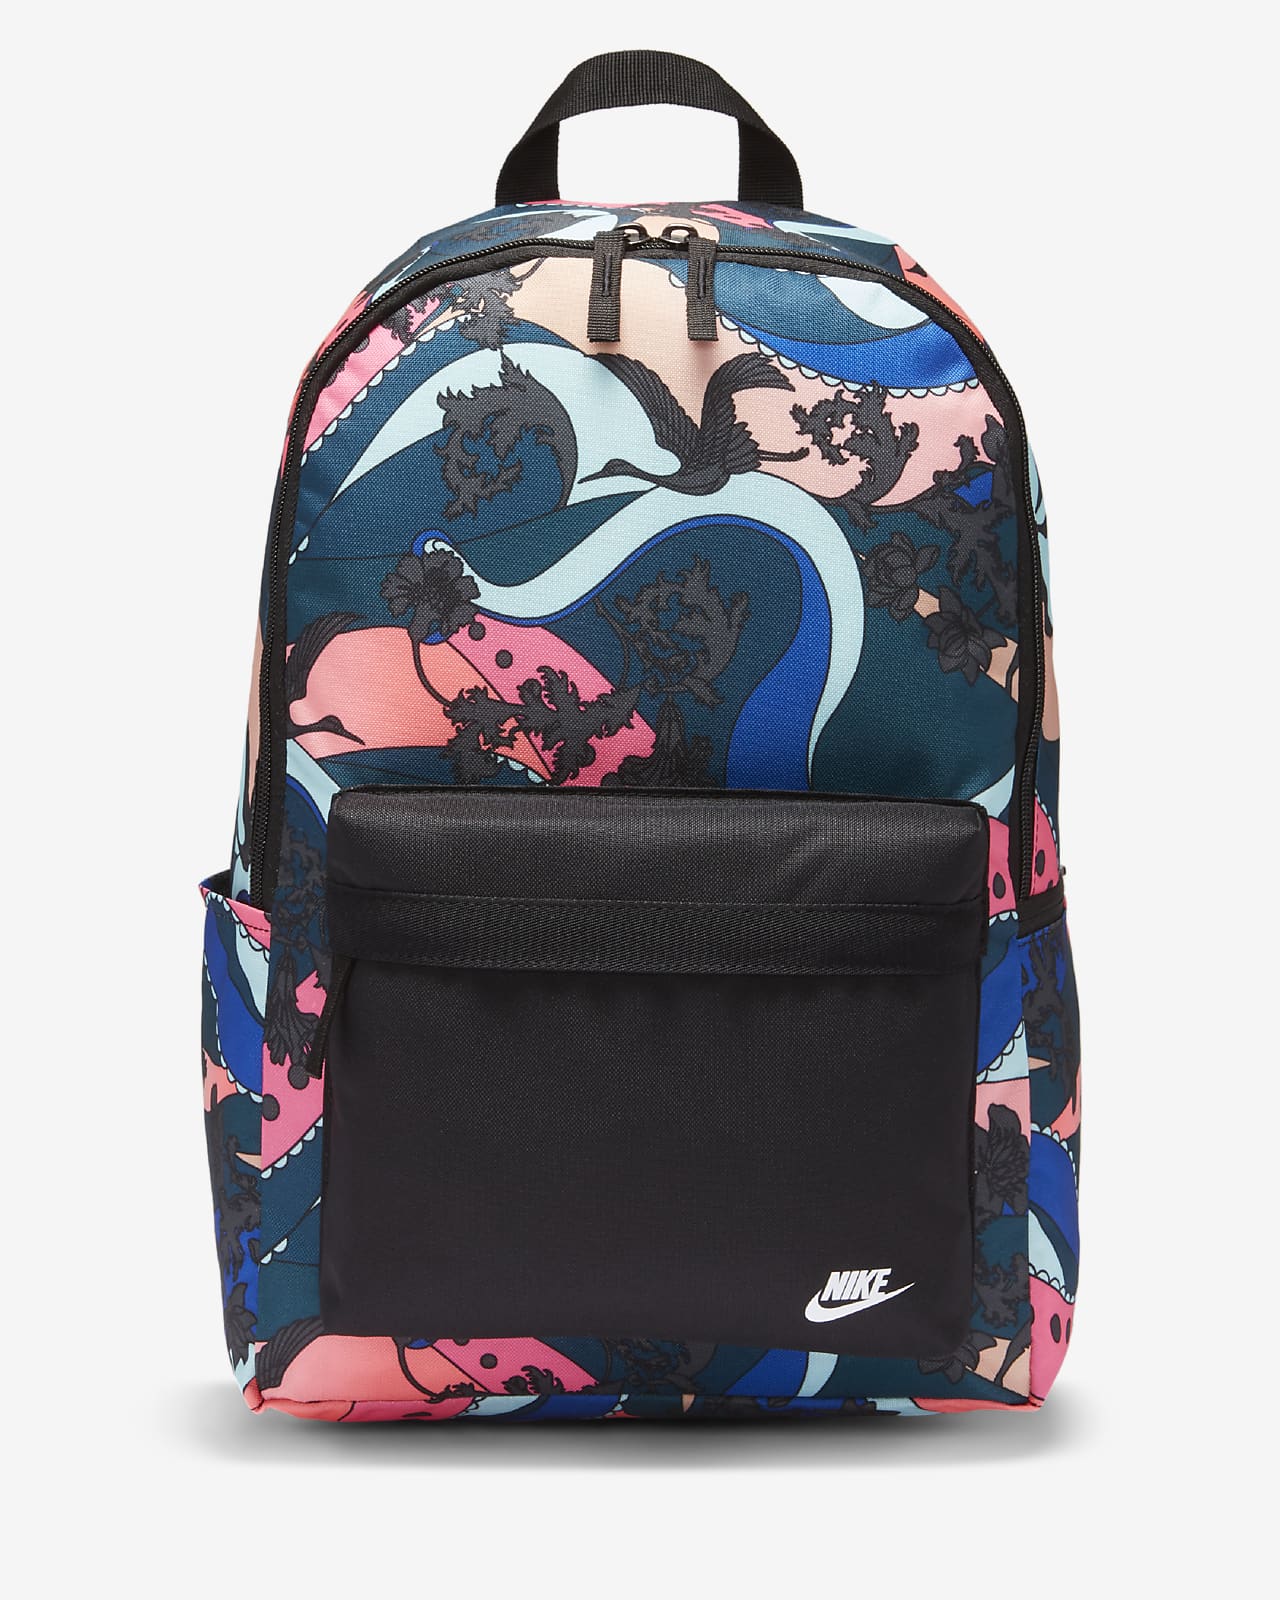 nike heritage backpack blue